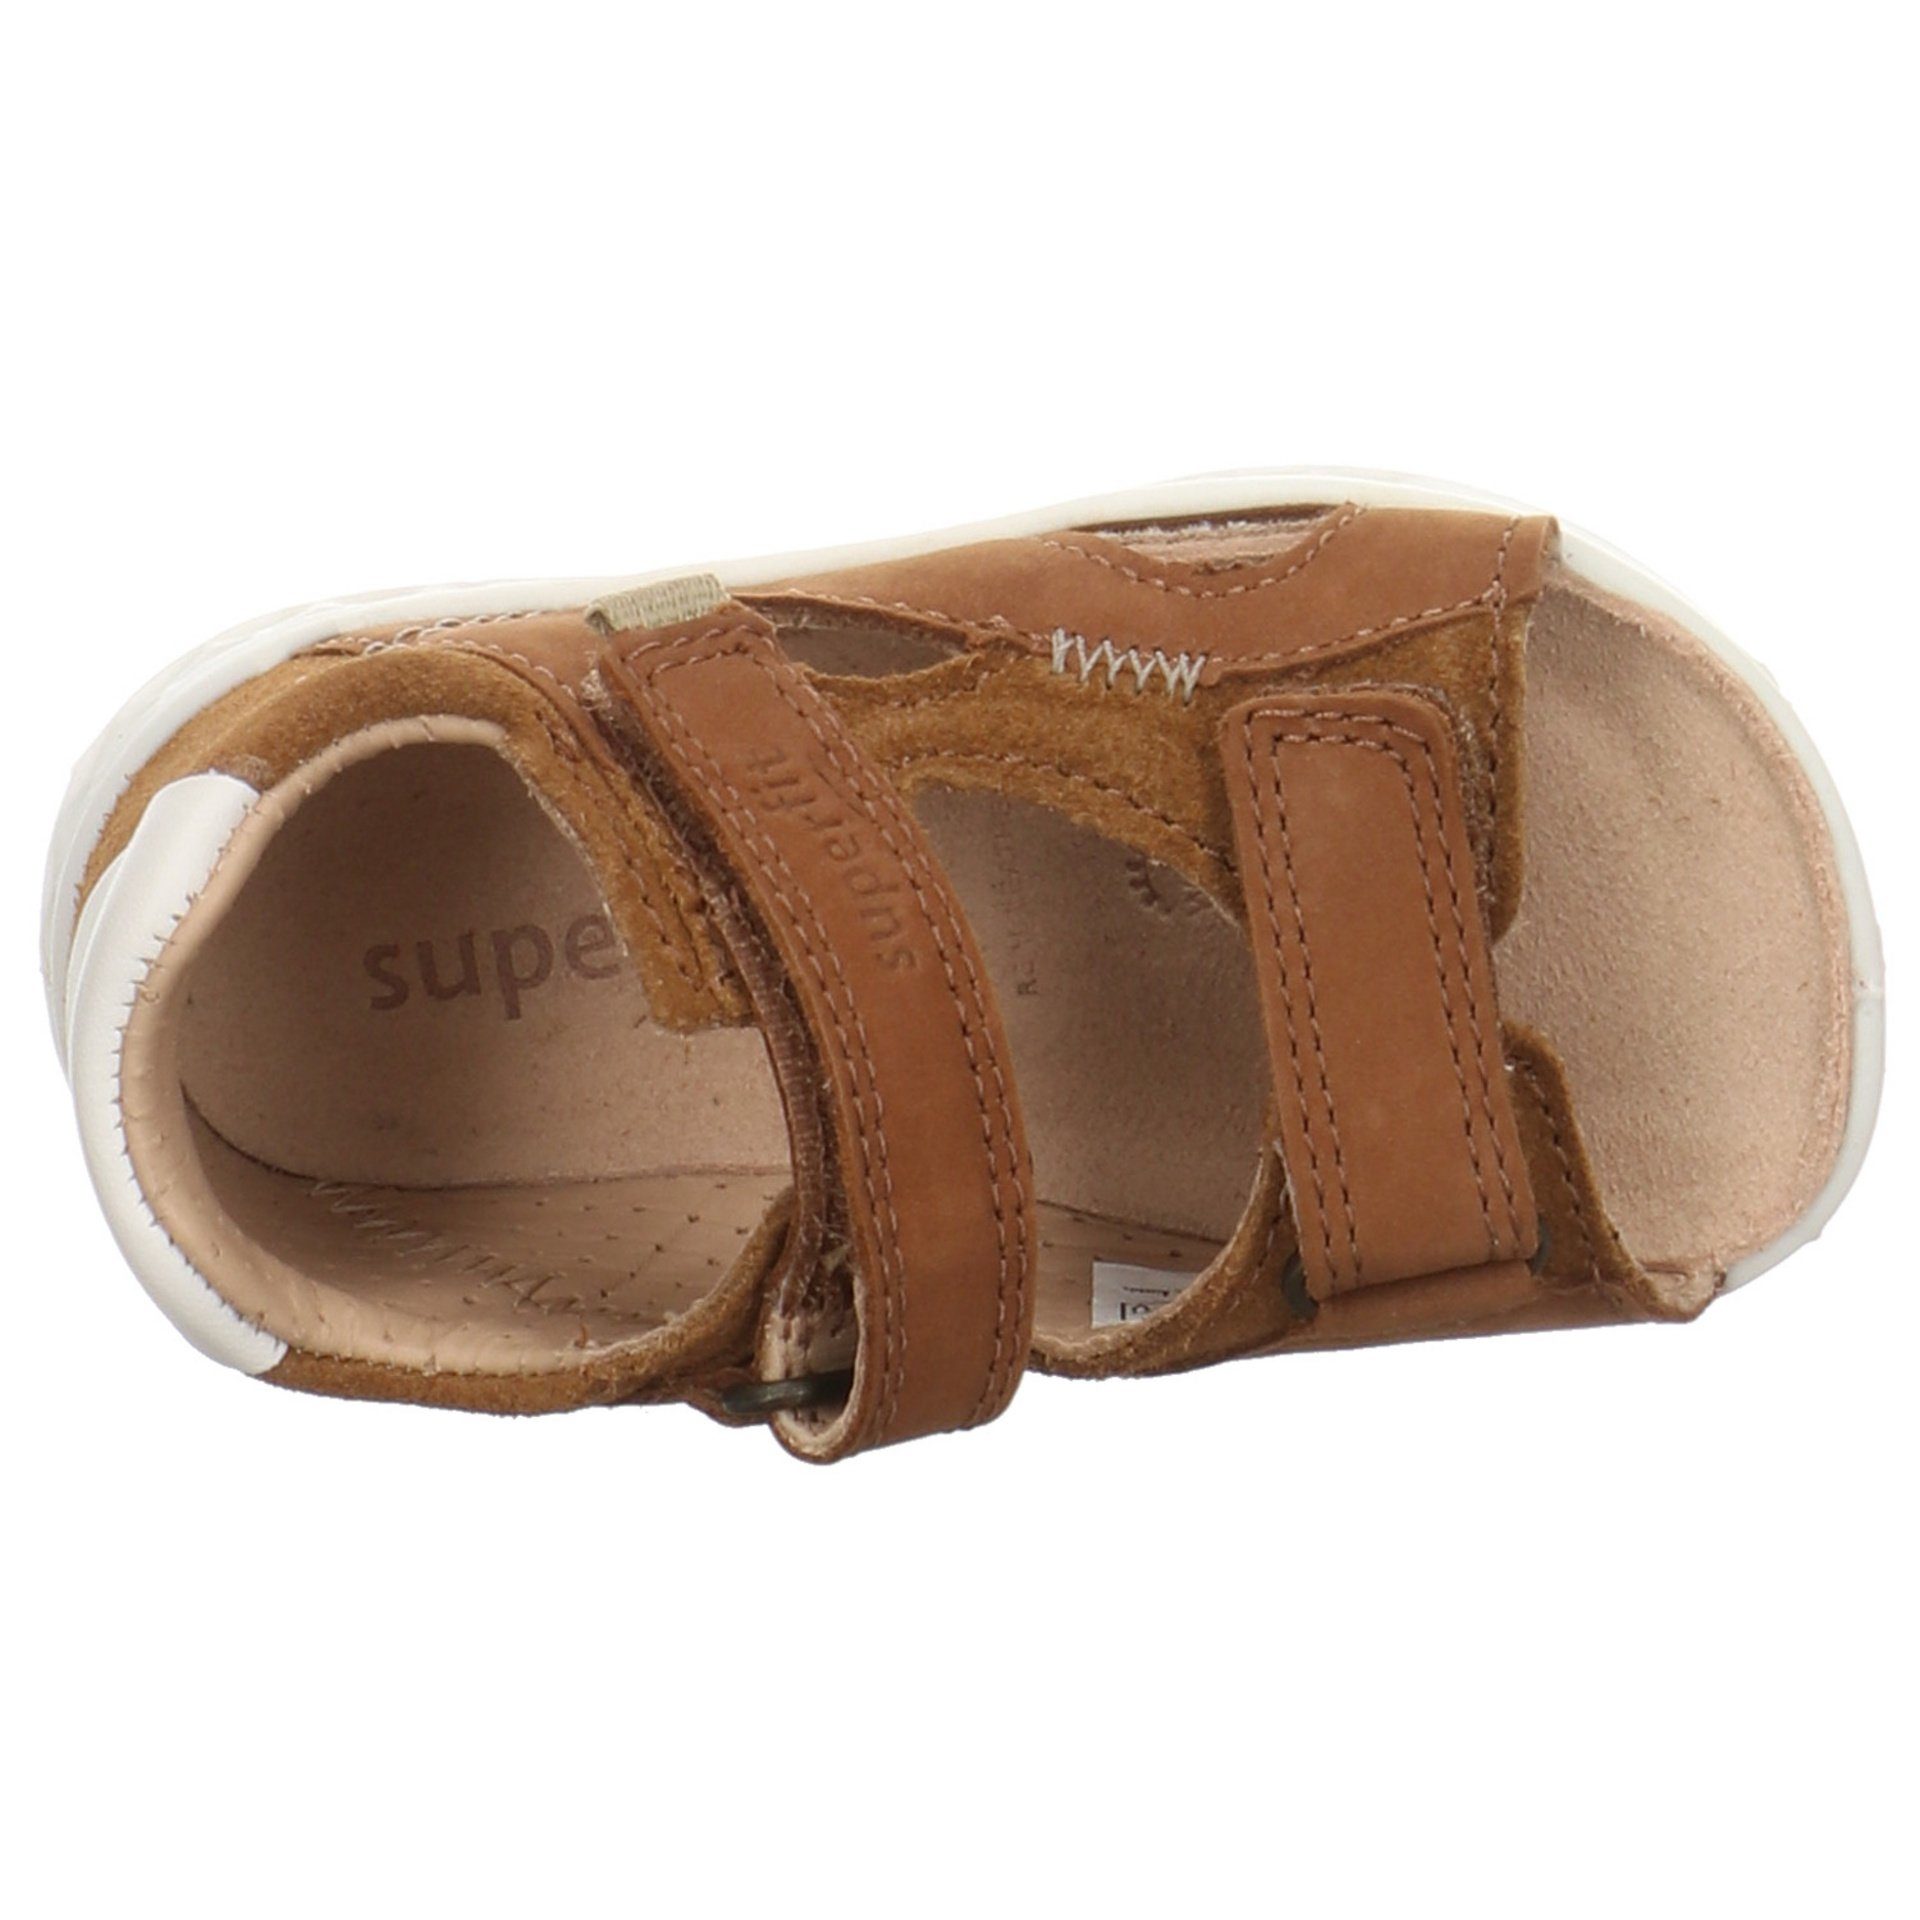 Superfit Jungen Kinderschuhe Sandalen Schuhe Sandale BRAUN/BEIGE Lederkombination Sandale Lagoon